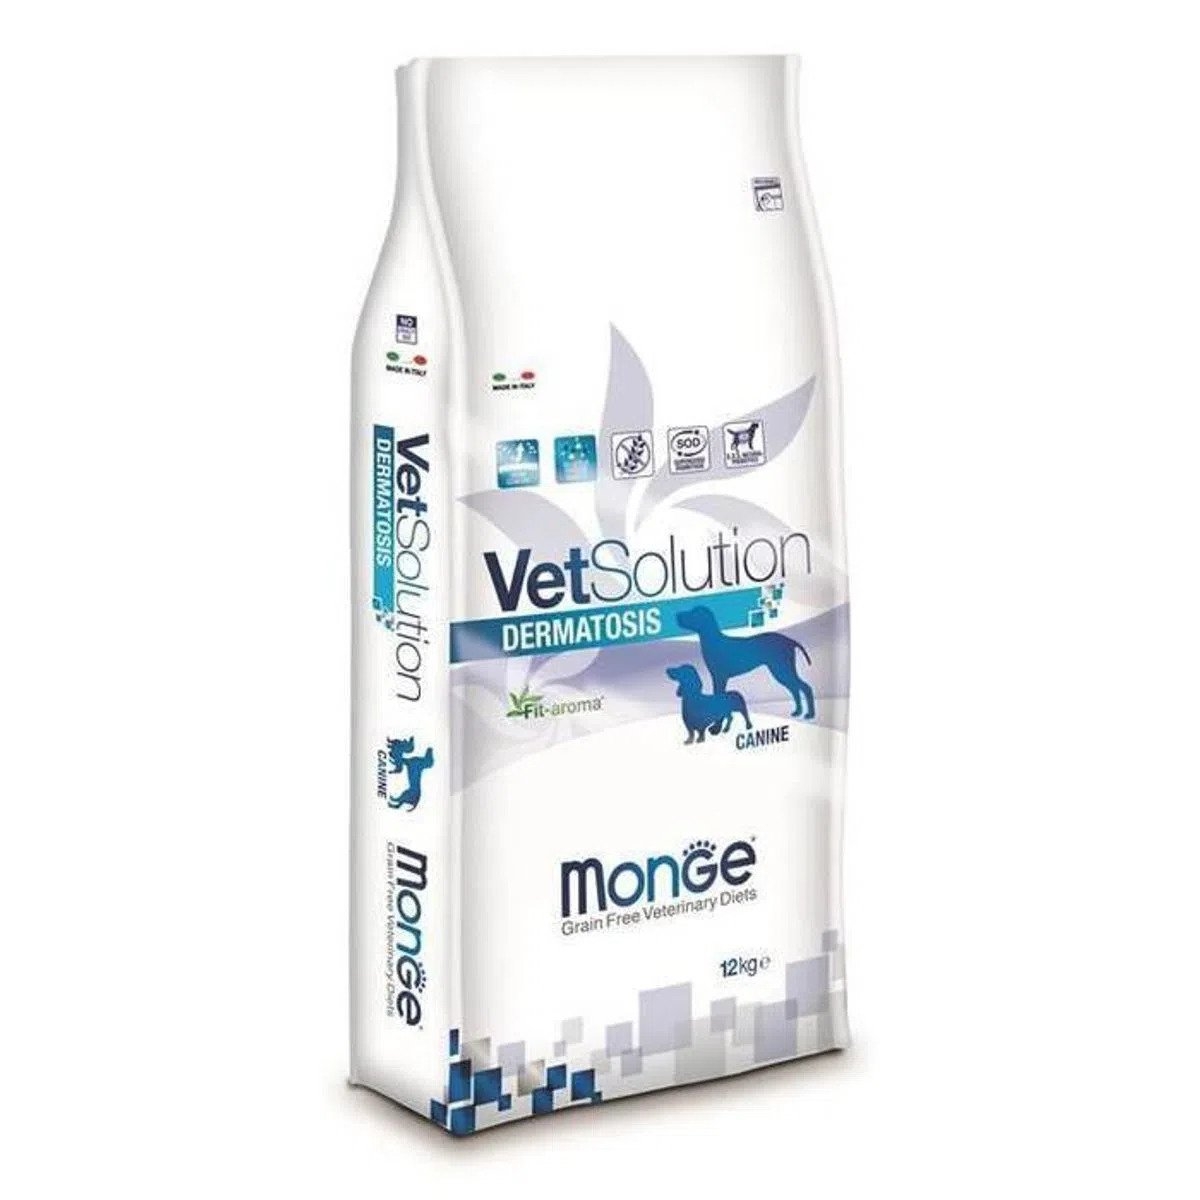 Monge Vetsolution Dermatosis Canine, 12 kg MONGE